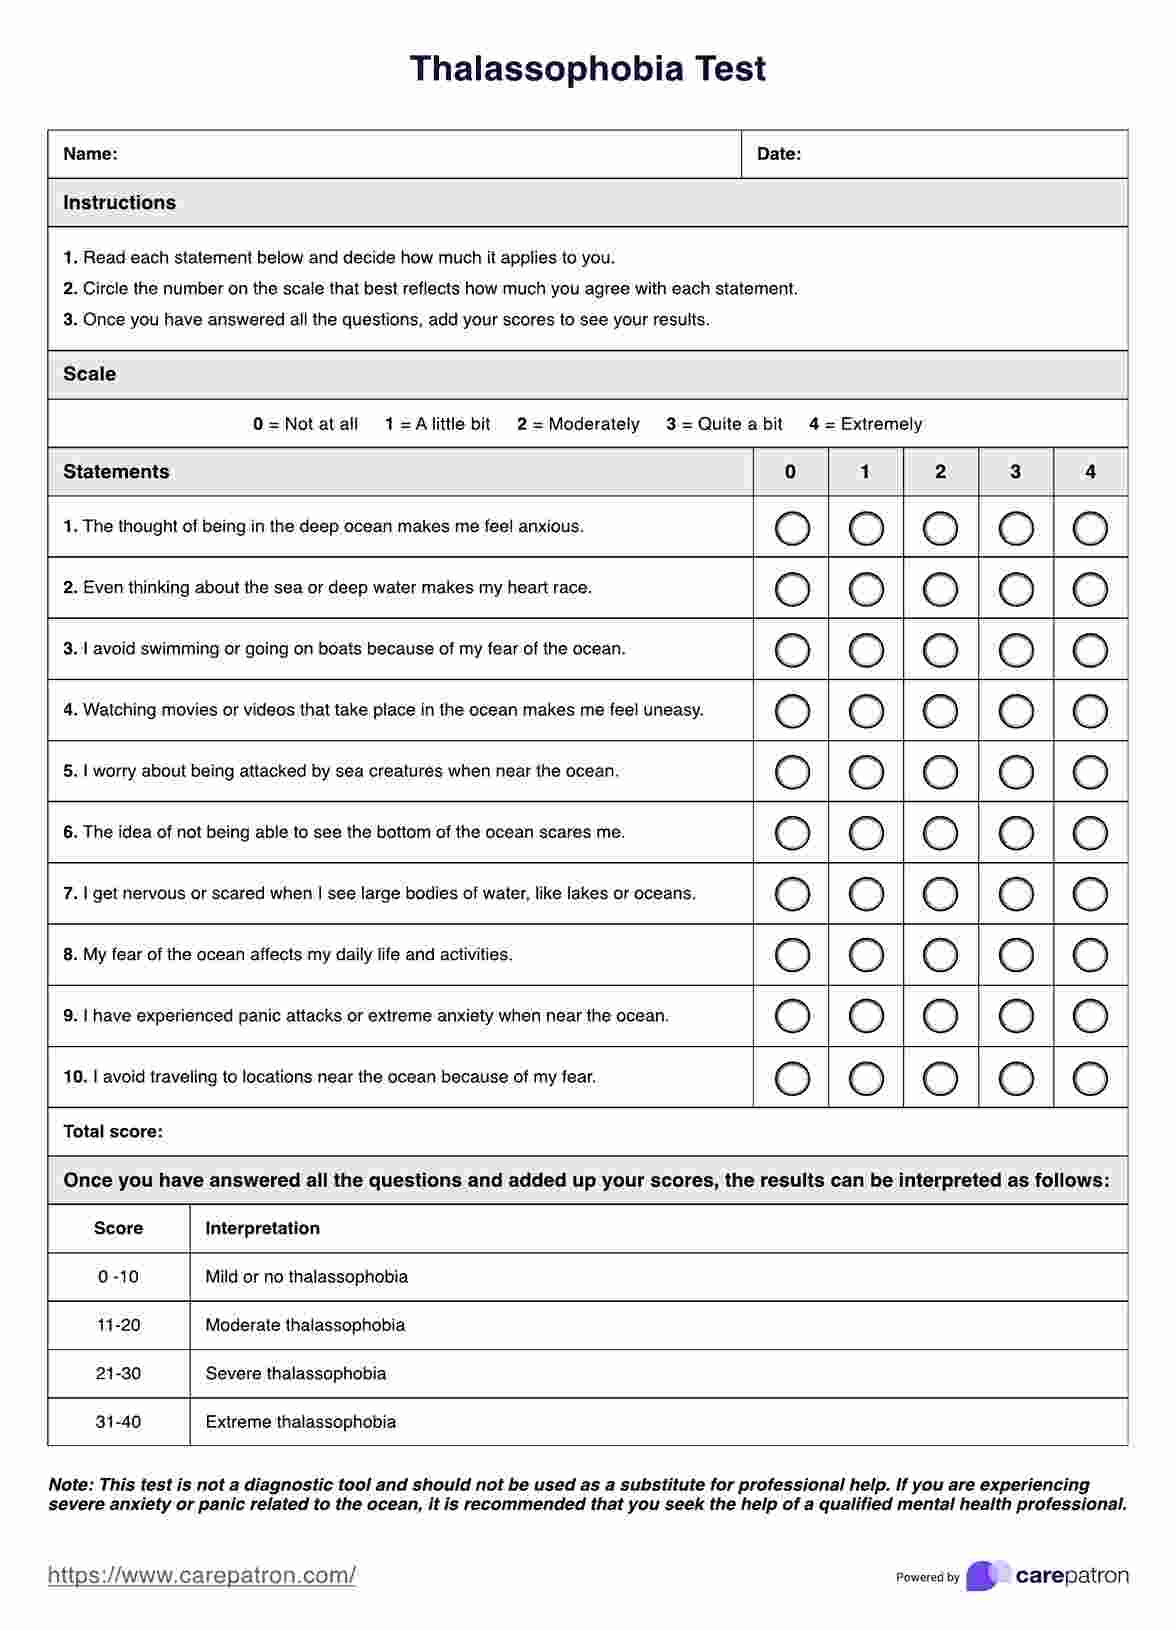 Thalassophobia Test PDF Example